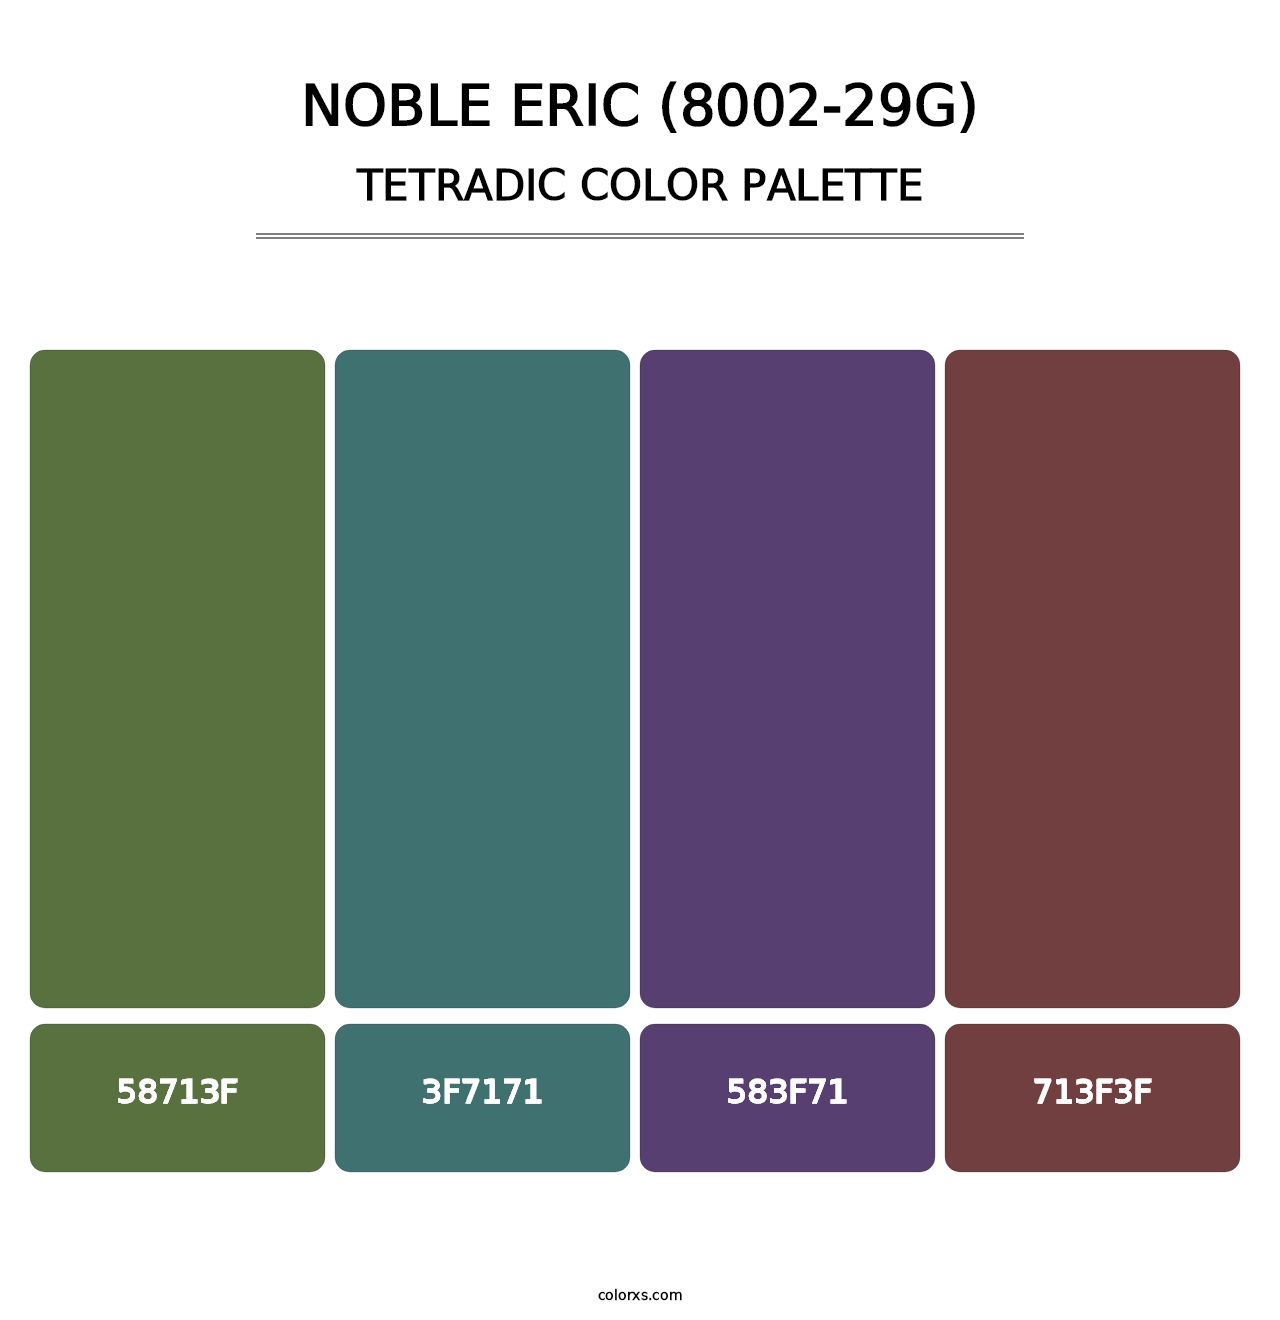 Noble Eric (8002-29G) - Tetradic Color Palette